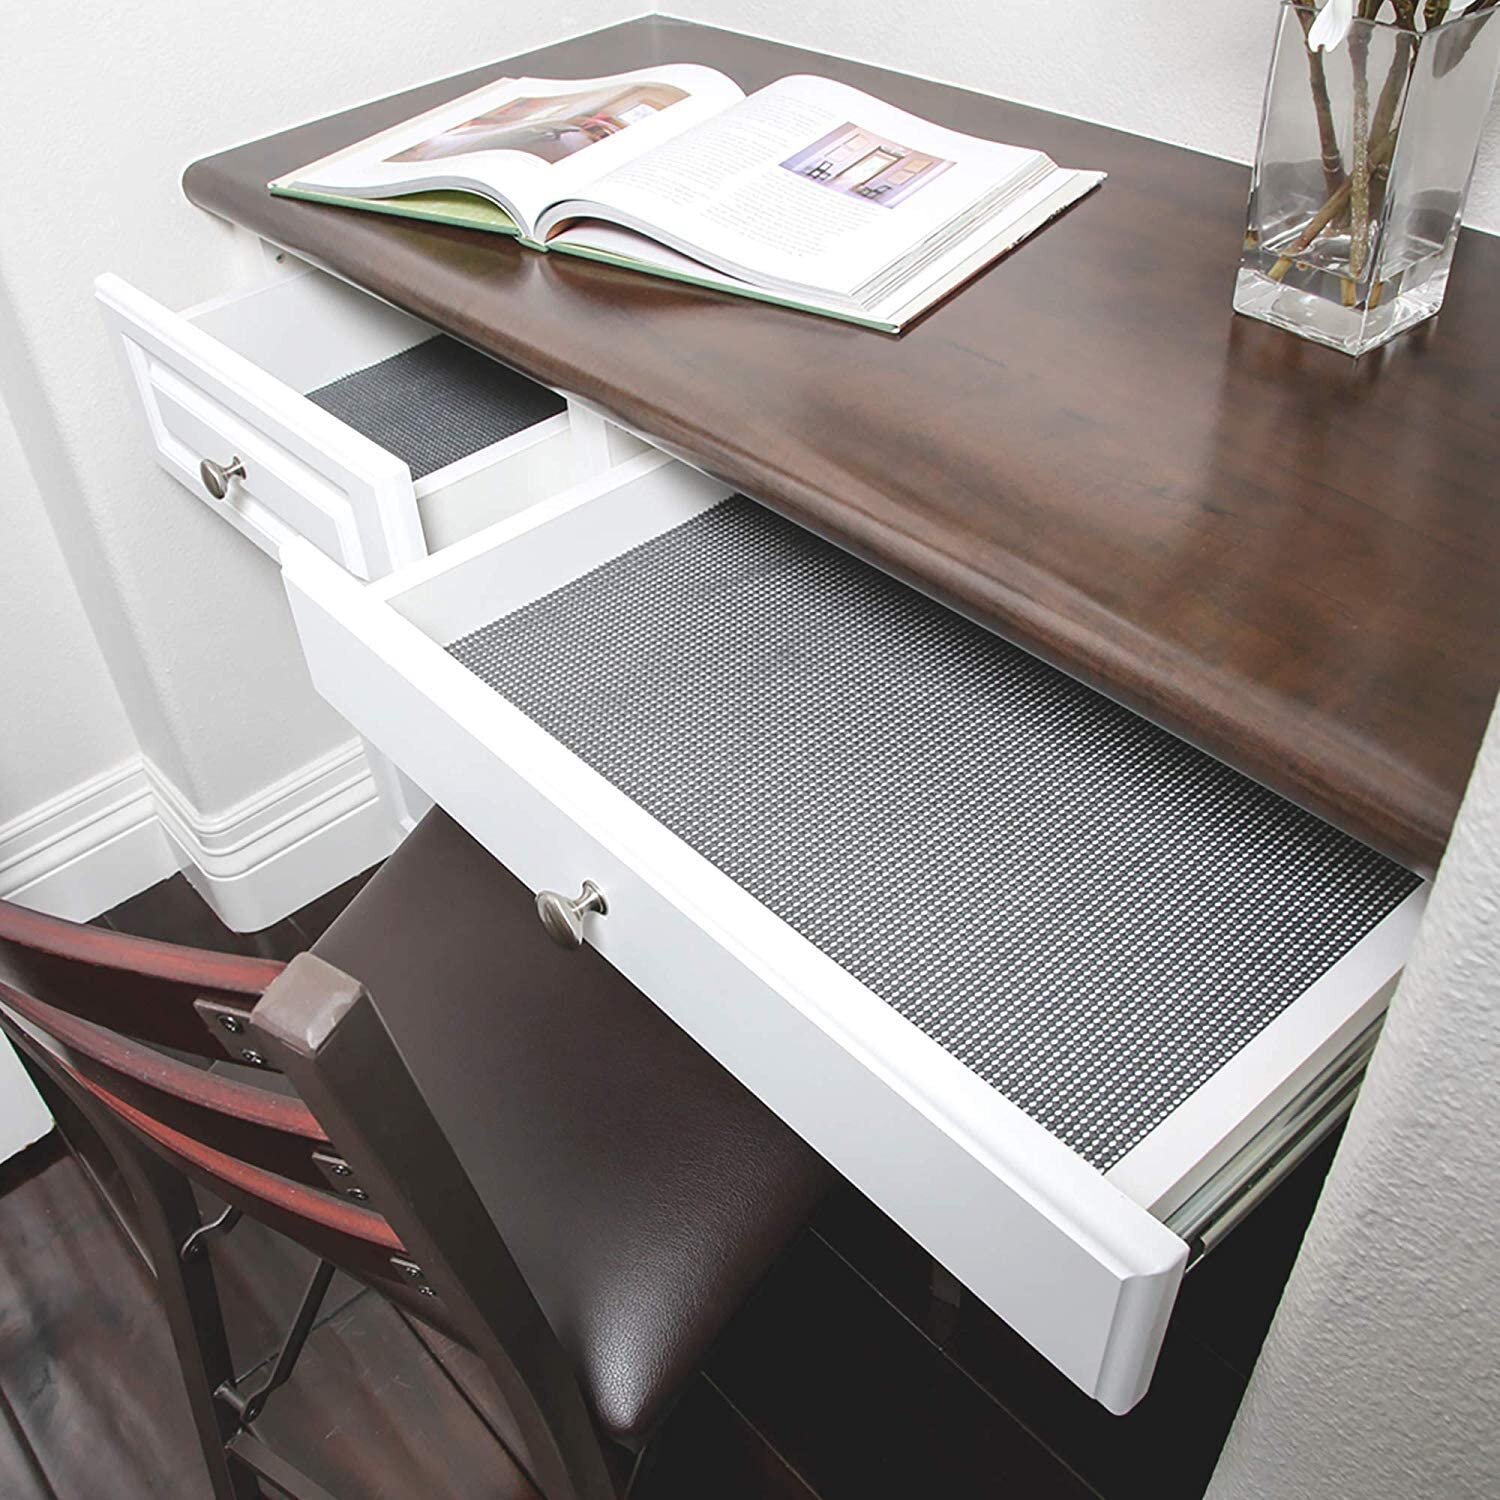 Smart Design Premium Grip Shelf Liner - 18 inch x 48 Feet (Set of 6 Rolls total)